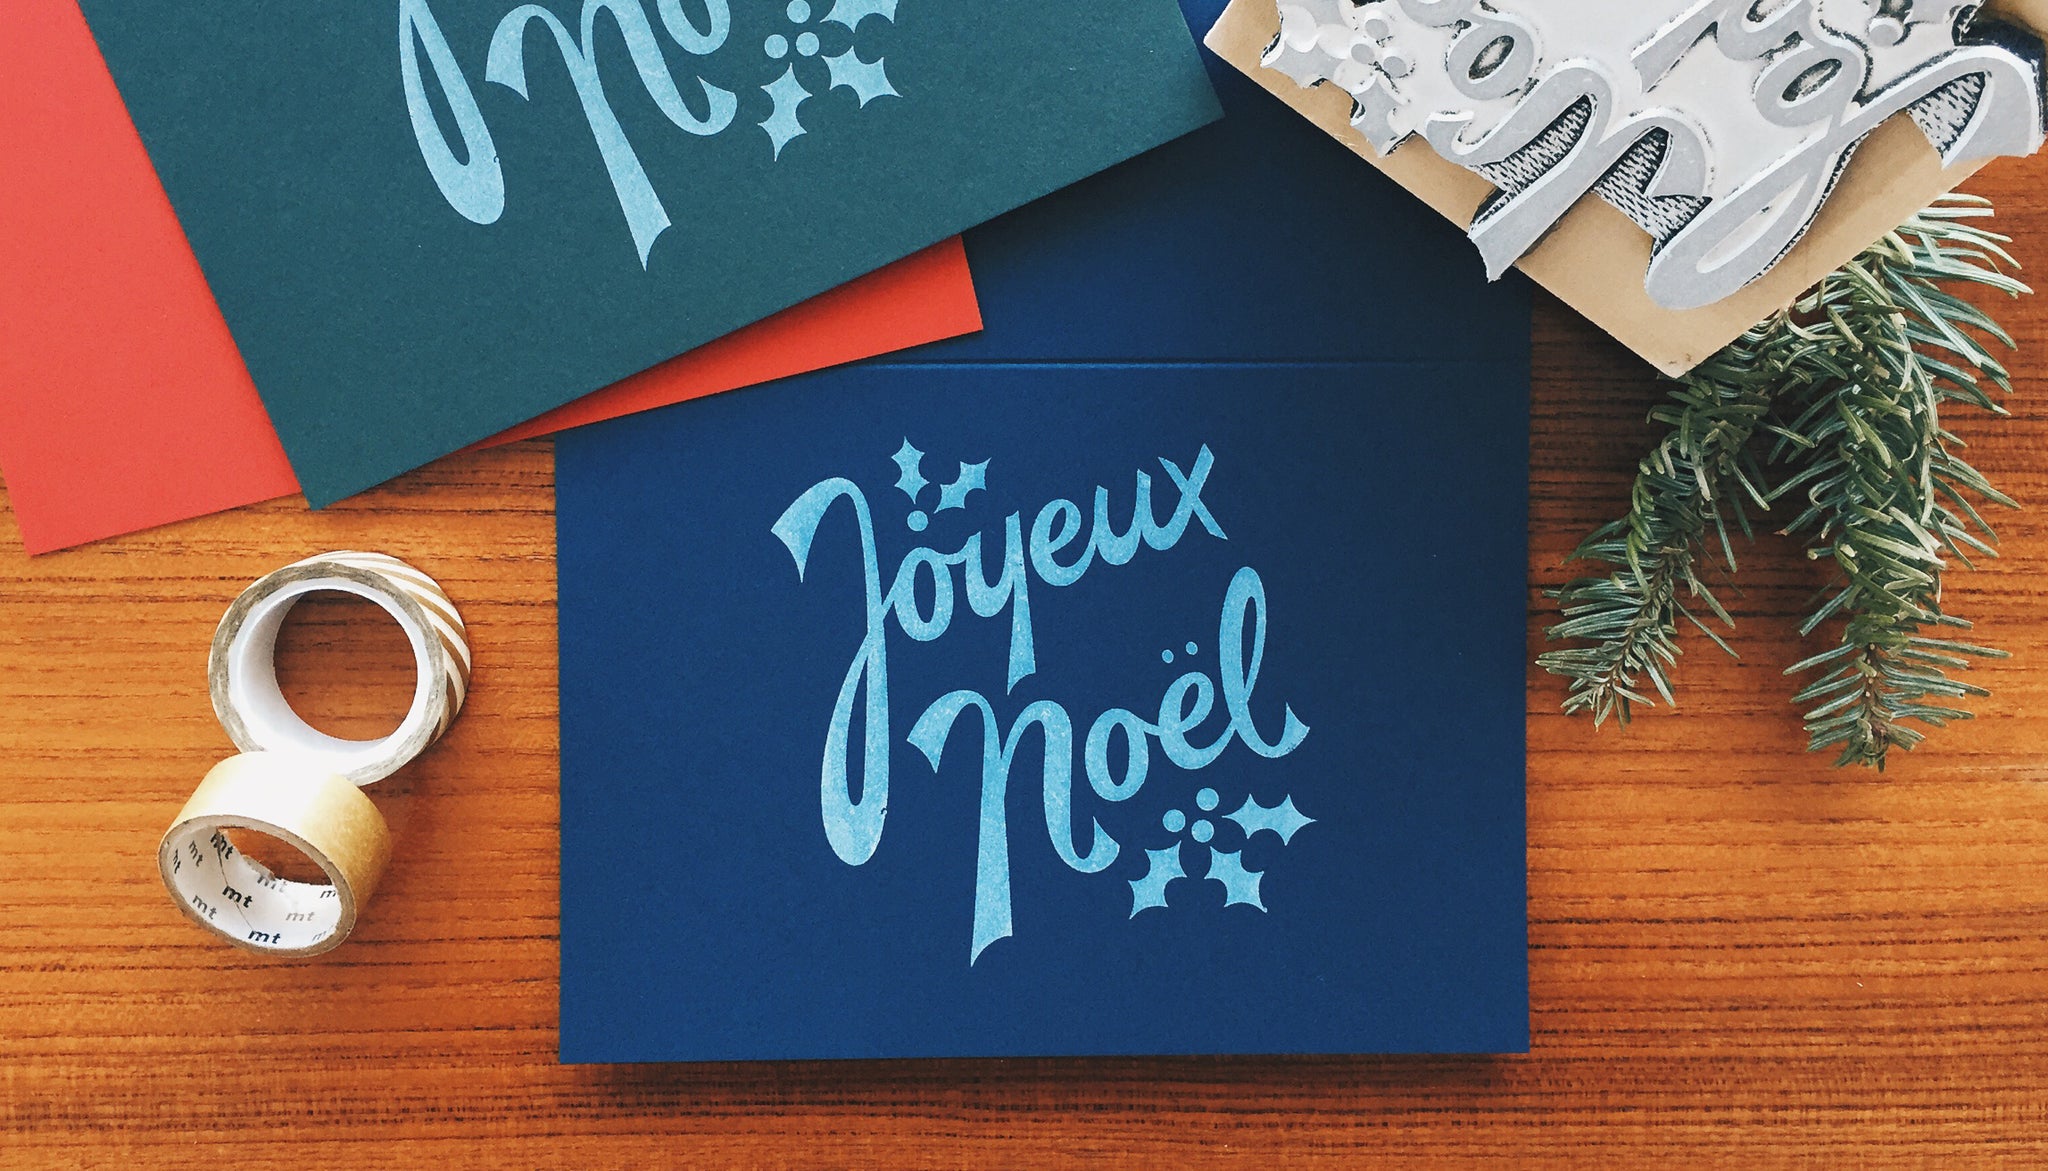 Joyeux Noël greeting card.